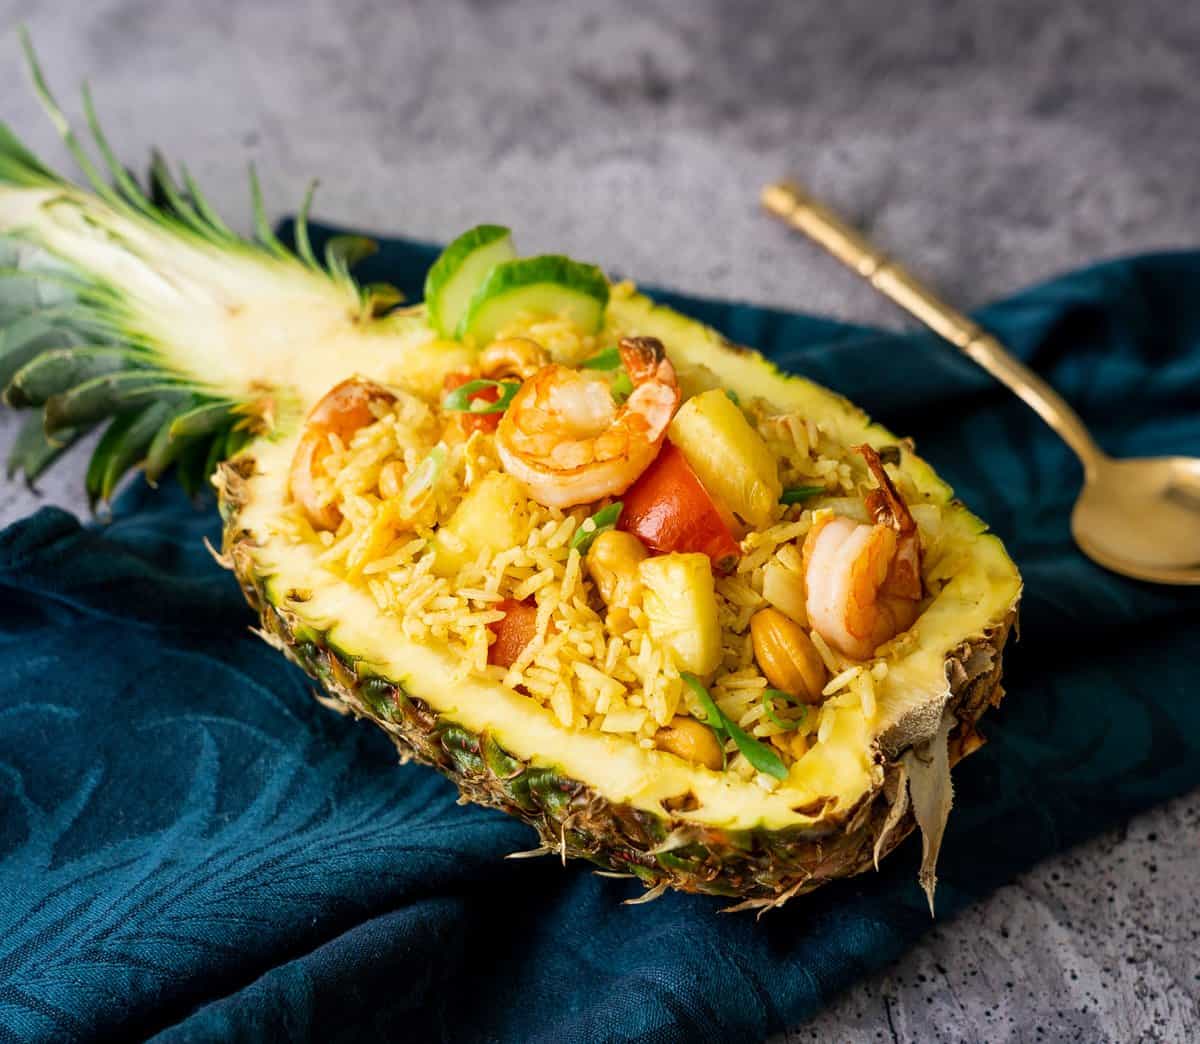 https://hot-thai-kitchen.com/wp-content/uploads/2014/02/Pineapple-fried-rice-new-blog.jpg